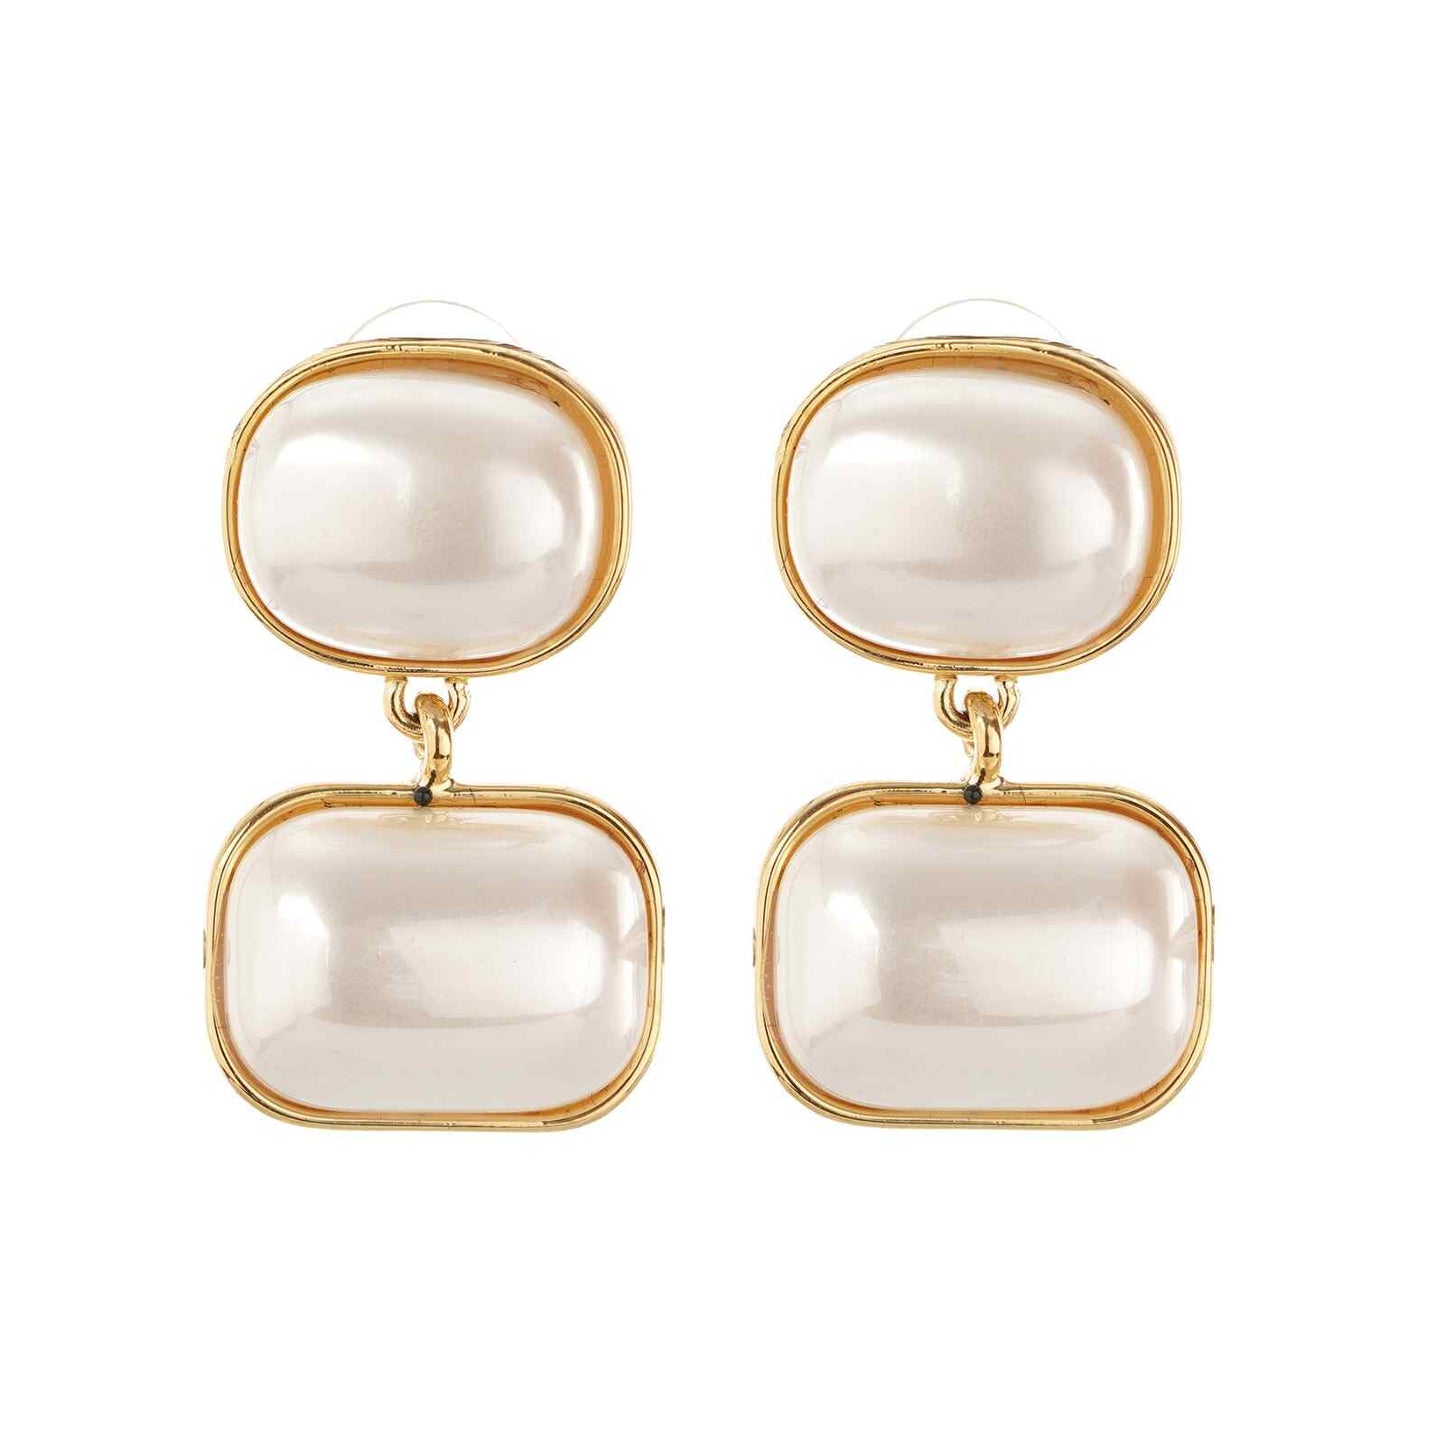 Pearl Drop Earrings | Waterproof Jewellery | Premium Quality | Lifetime Replacement Warranty